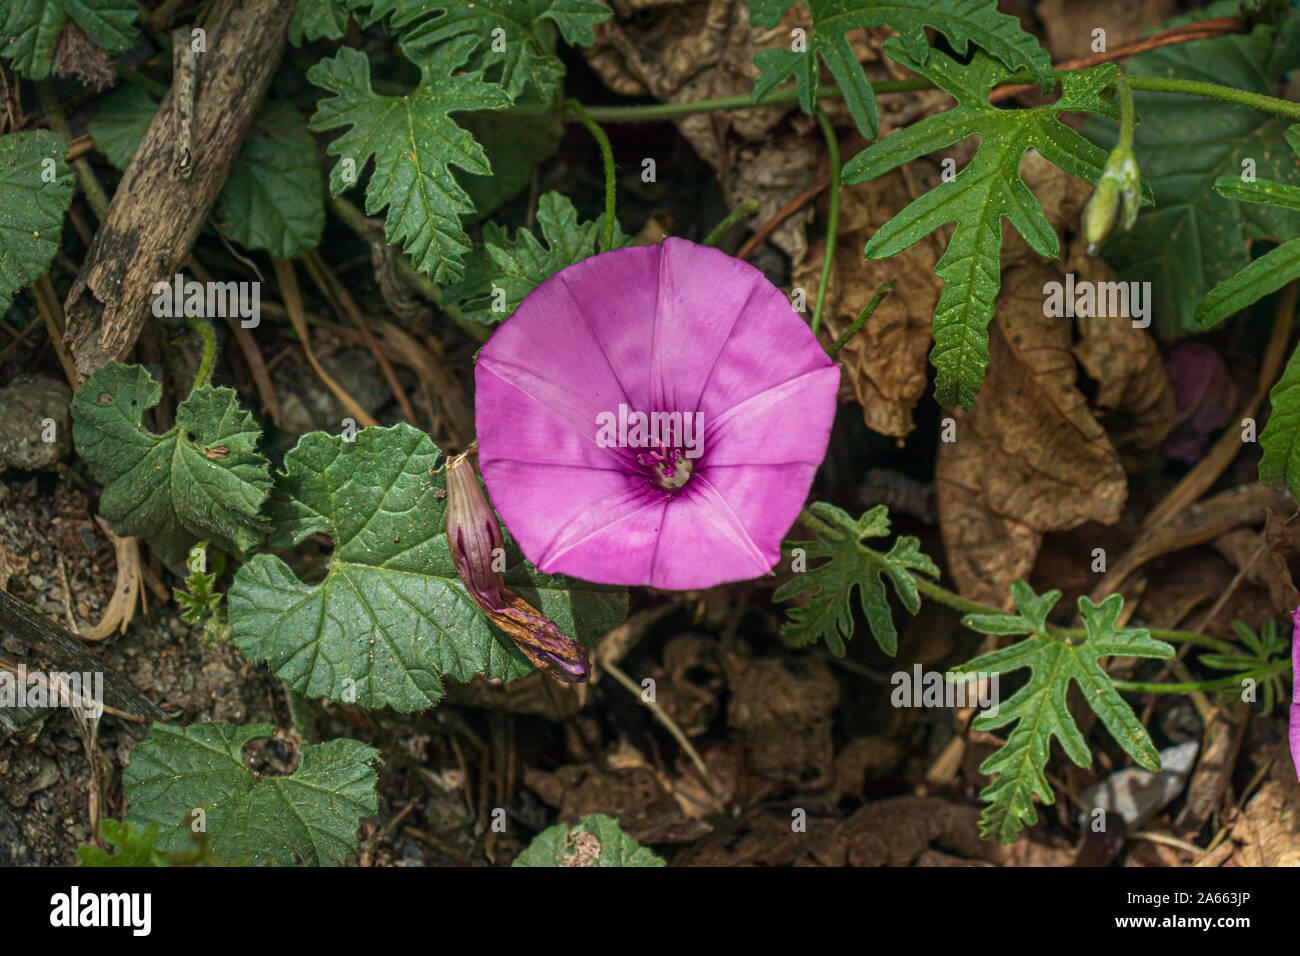 Convolvulus althaeoides, Malve bindweed in Blume Stockfoto